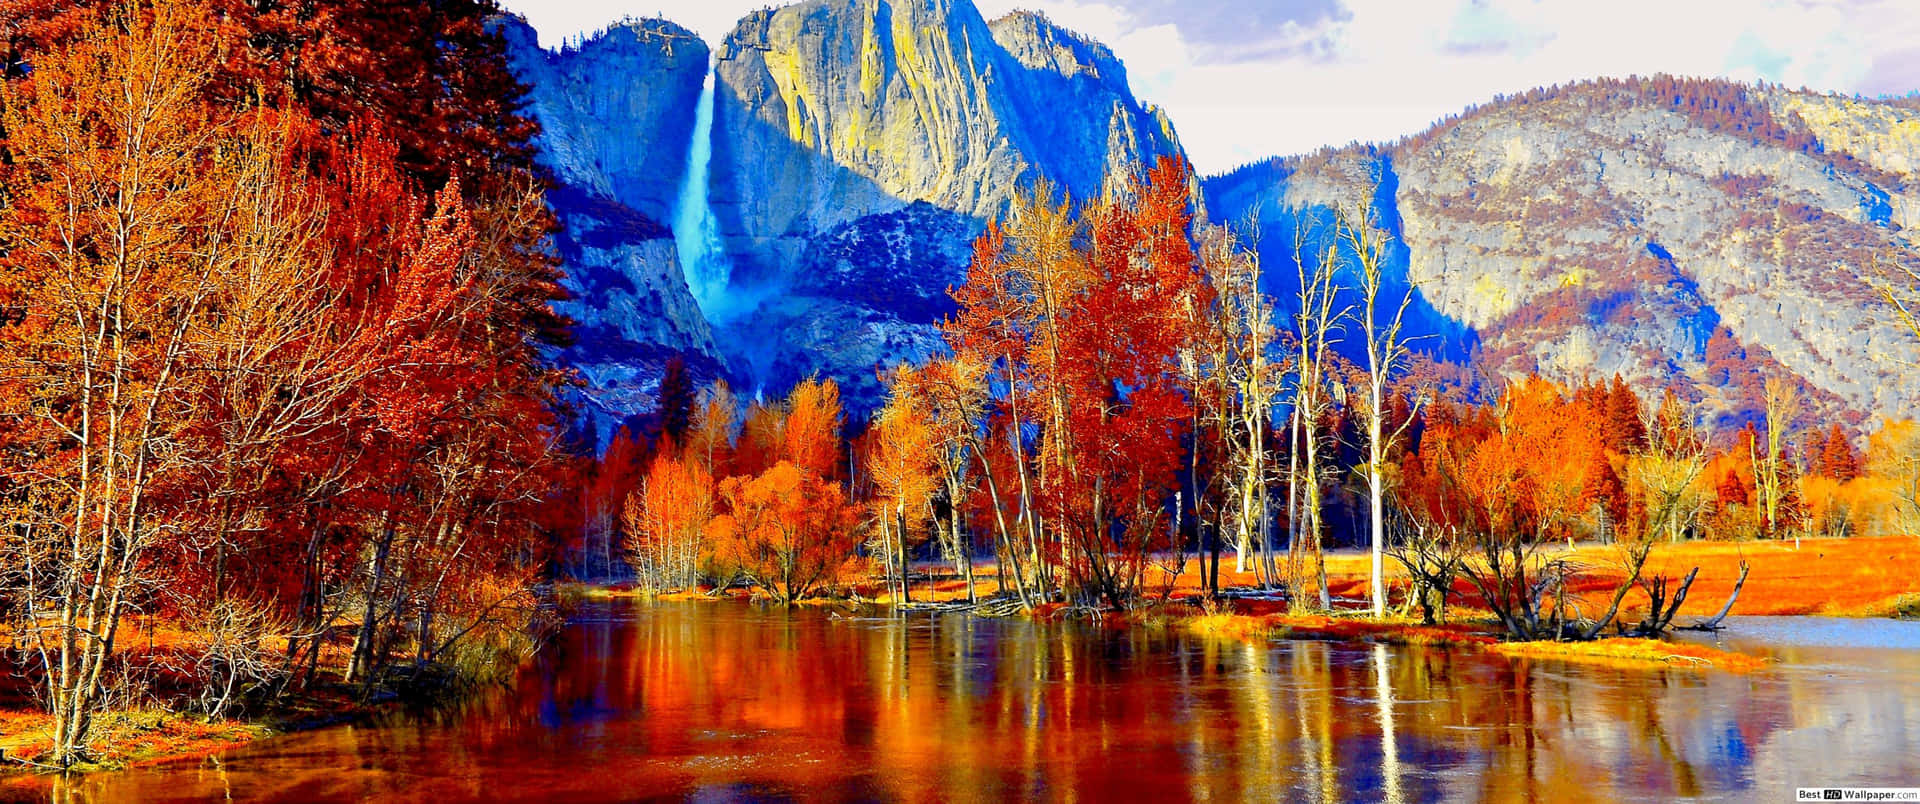 3440x1440 Fall Season With Lake And Mountain View Wallpaper